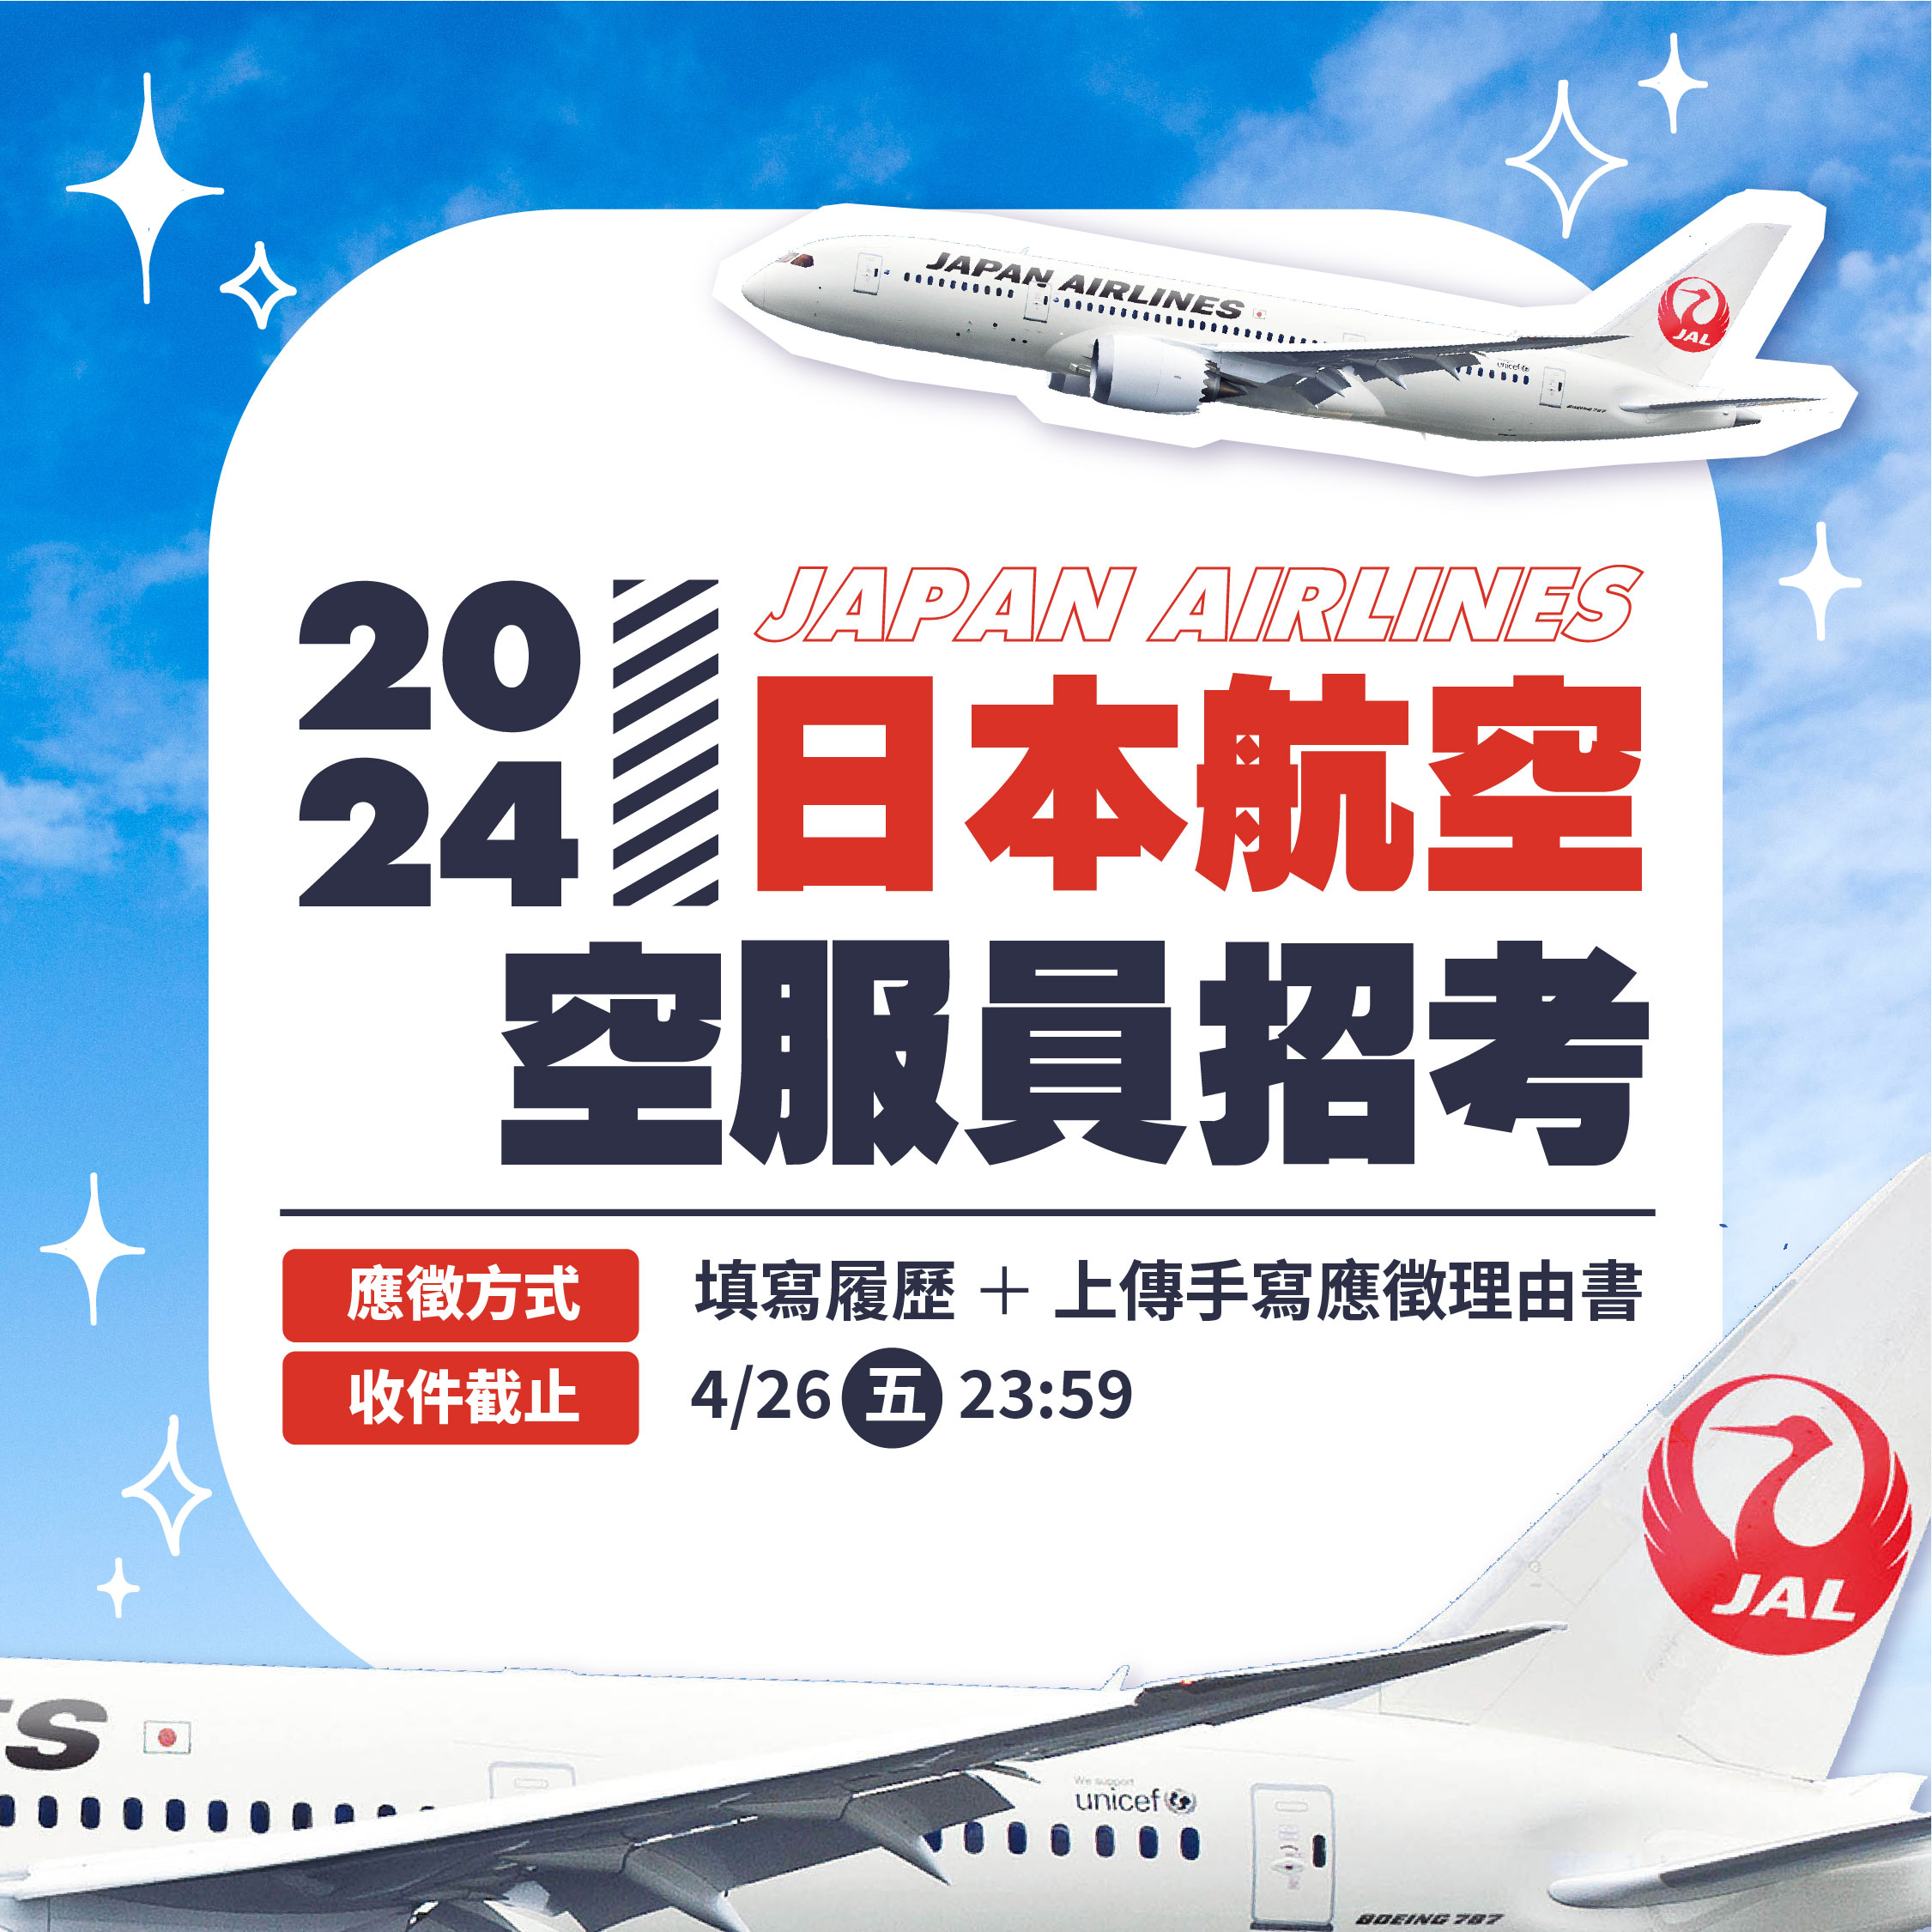 【Recruitment】JAL 2024 Flight Attendant Recruitment Plan in Taiwan Begins! (Deadline for Applications: April 26)